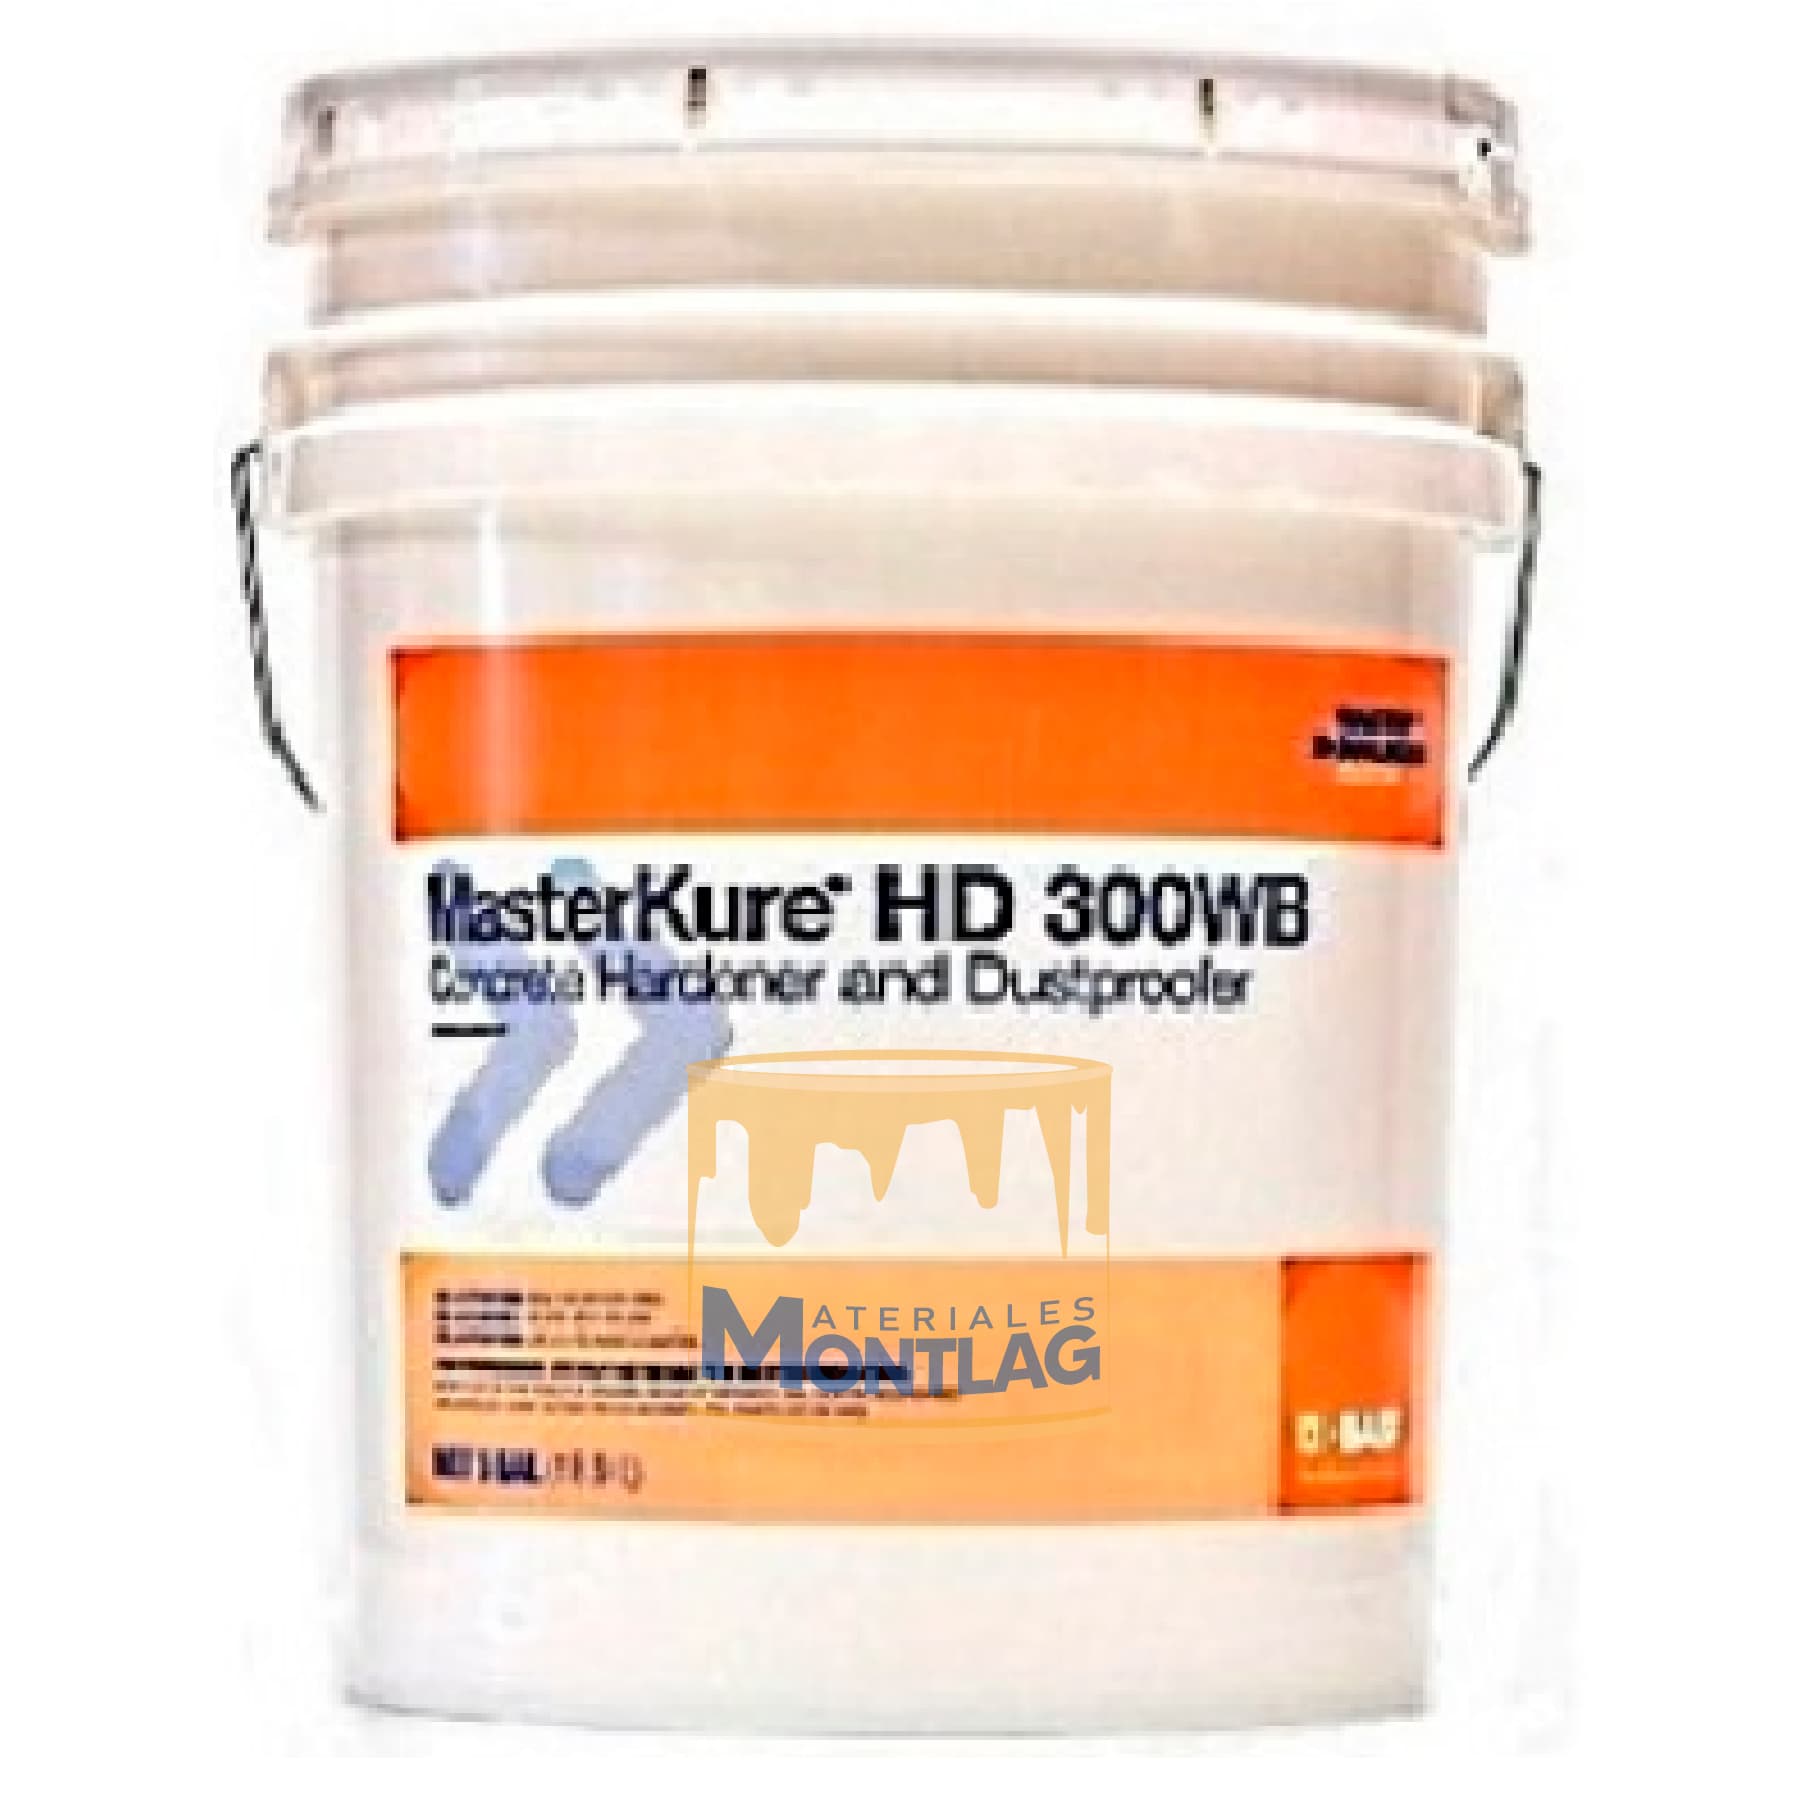 Materiales Montlag - MasterKure HD 300 WB 5 Gal